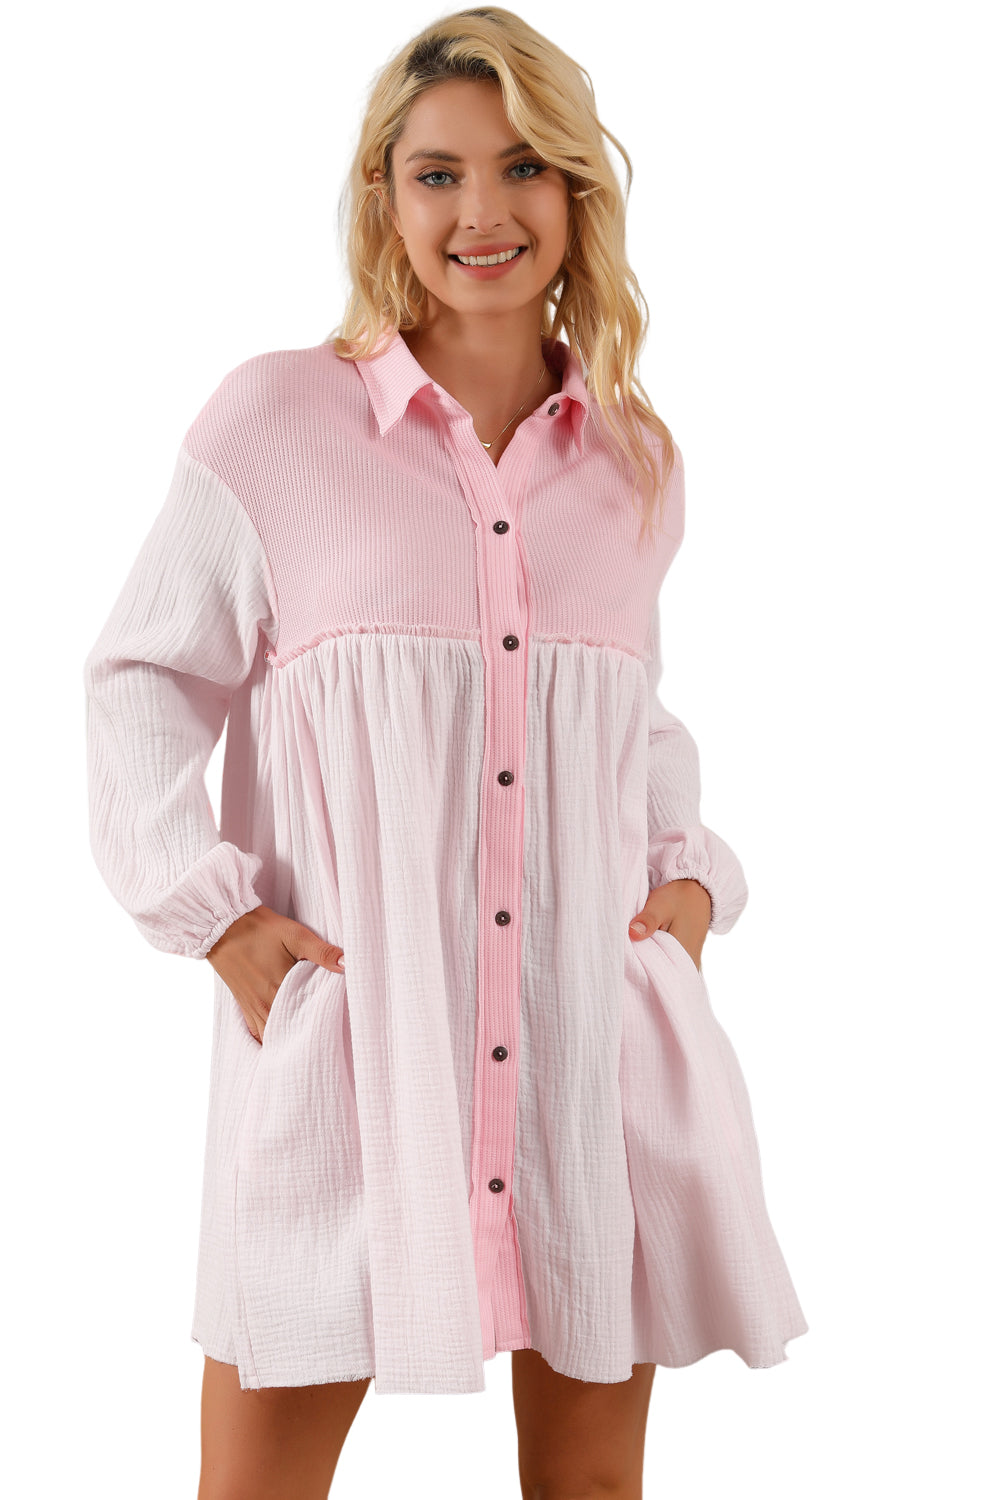 Midnight Sky Crinkle Puff Sleeve Shirt 100% Cotton Womens Dress